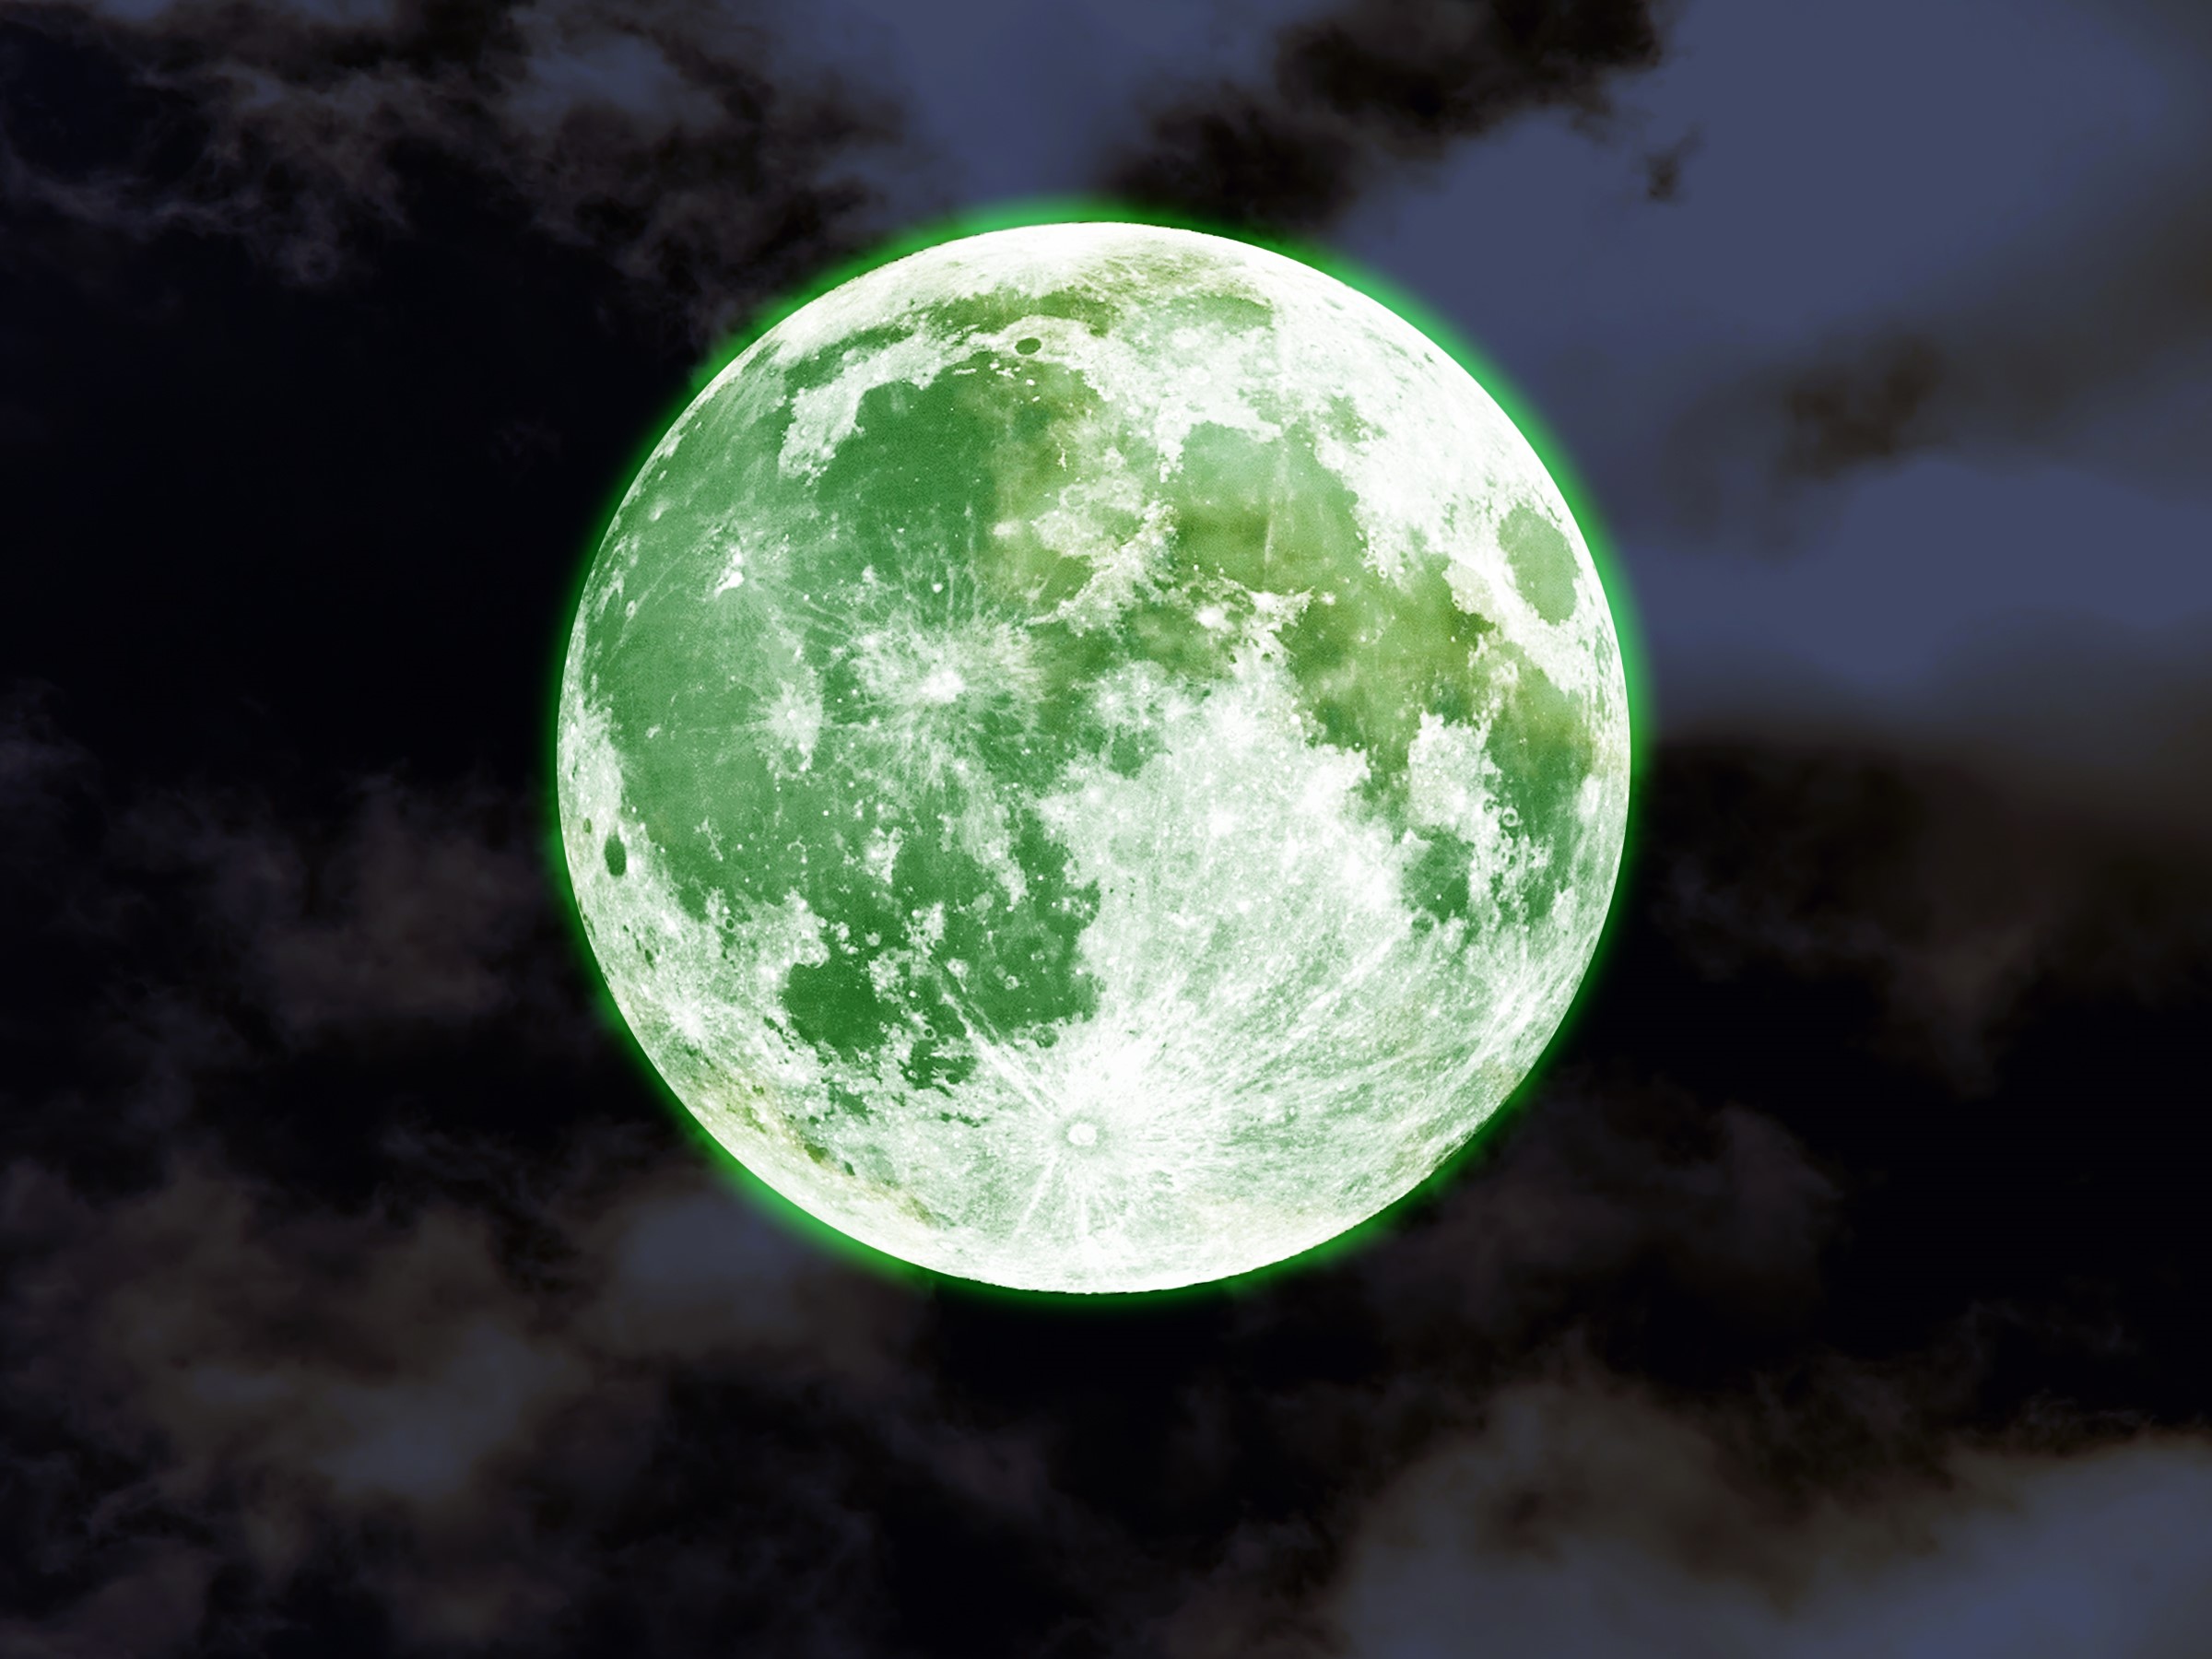 The moon will turn green.